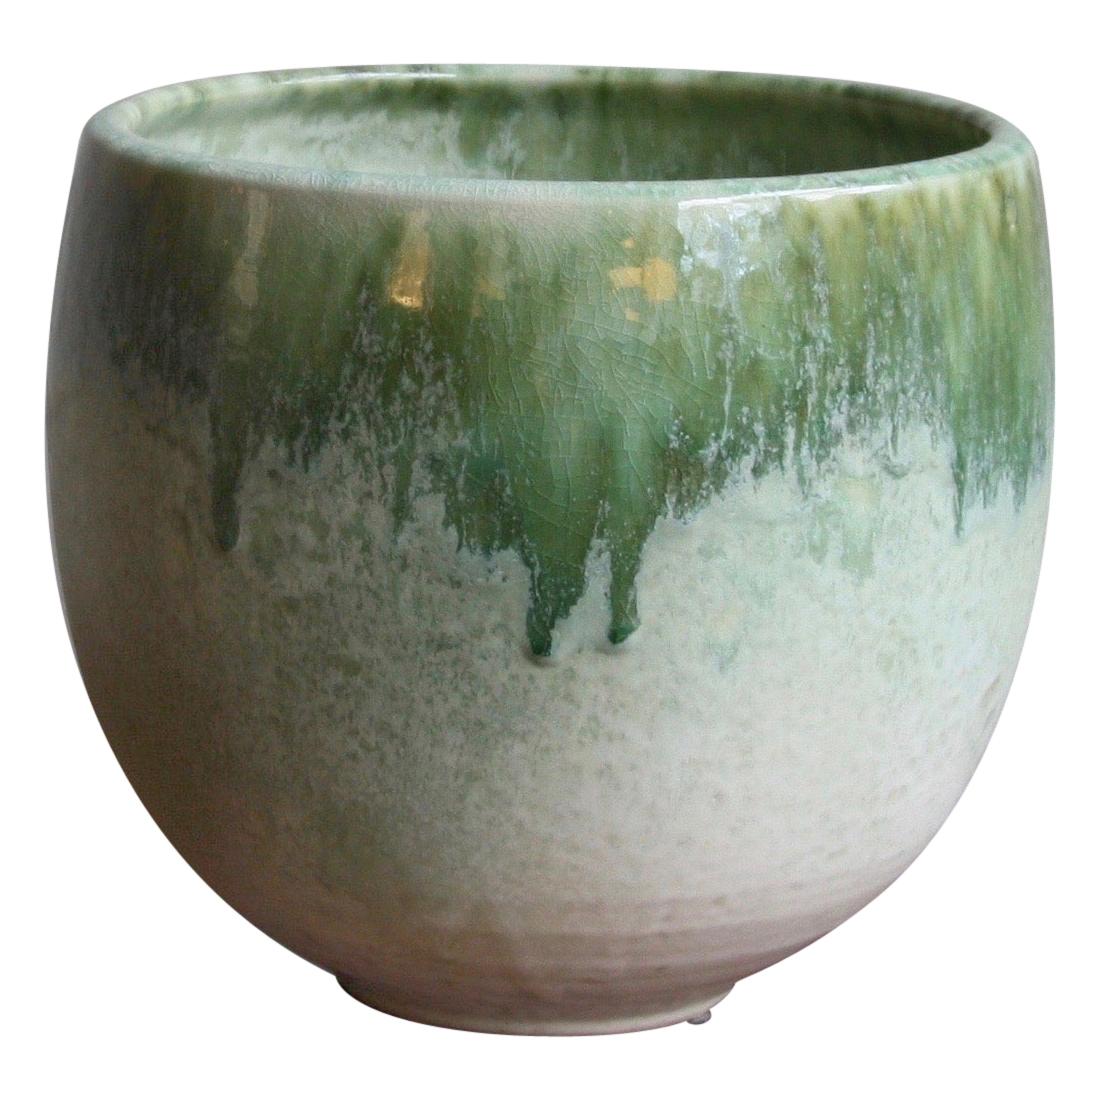 Aage & Kasper Würtz One off Hand Thrown Art Piece Oval Vase White & Green Glaze 